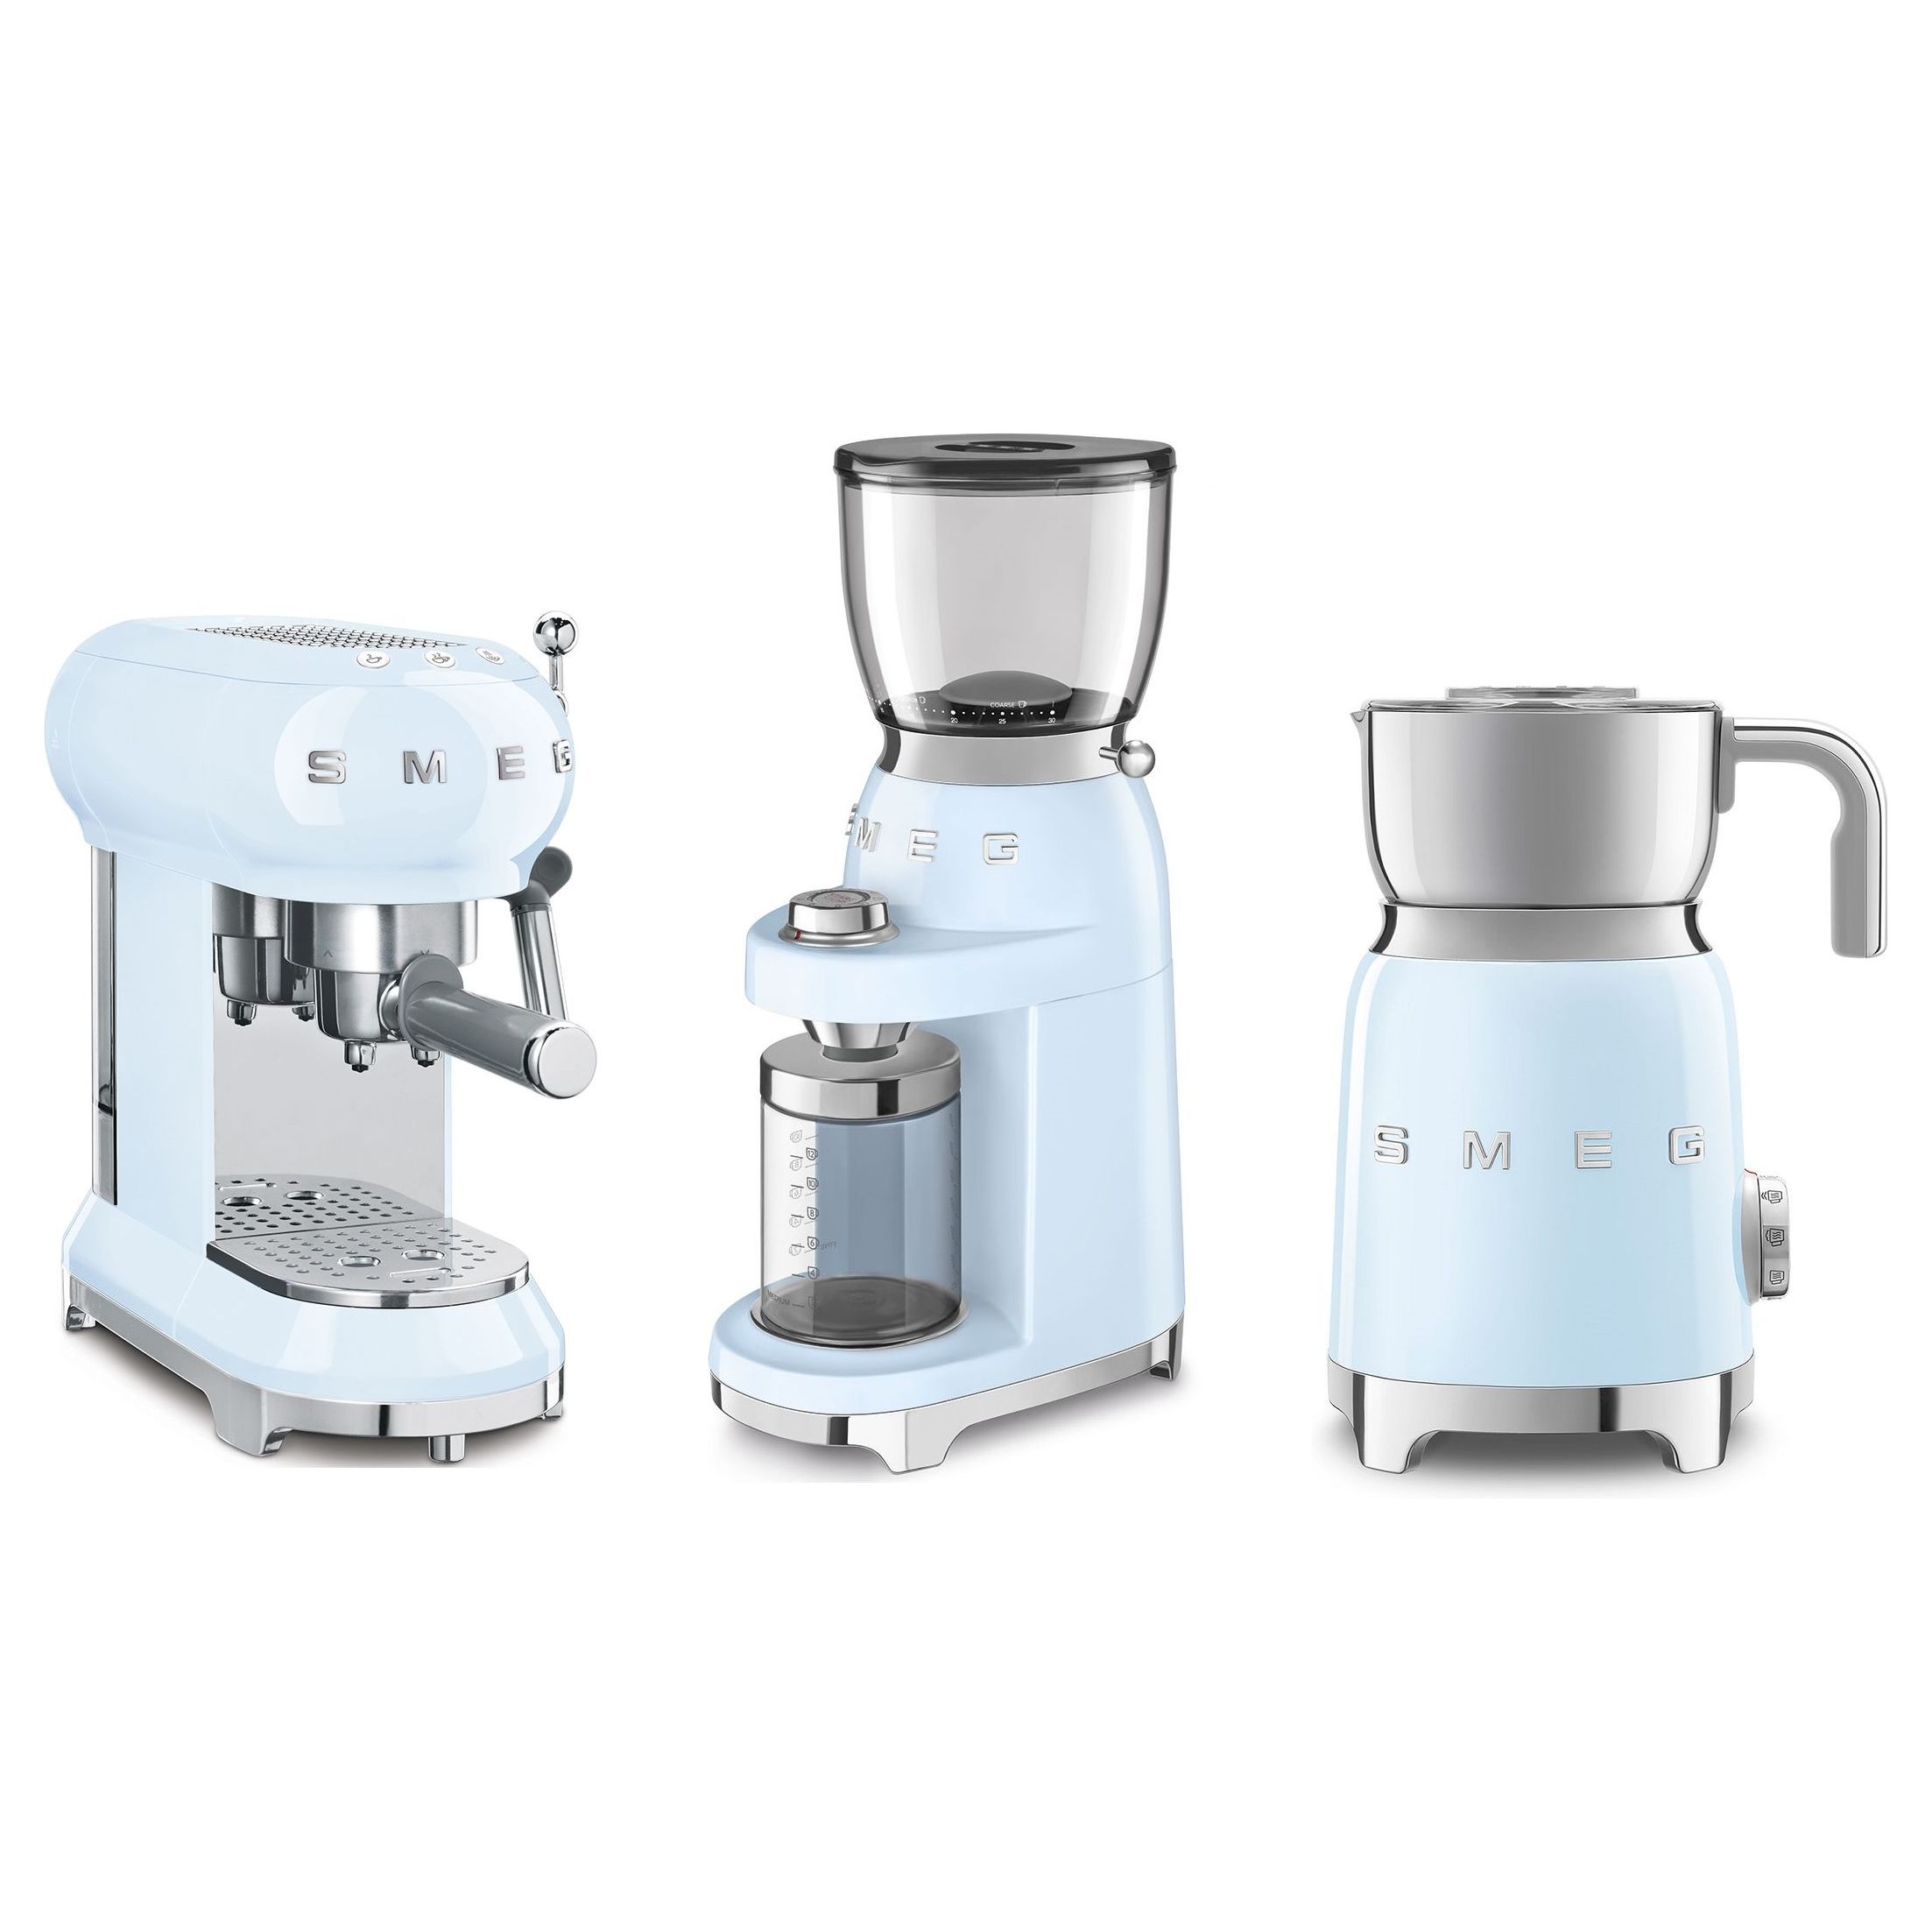 SMEG 50's Retro-Style Coffee Set (Espresso Maker / Coffee Grinder / Milk Frother) - Pastel Blue